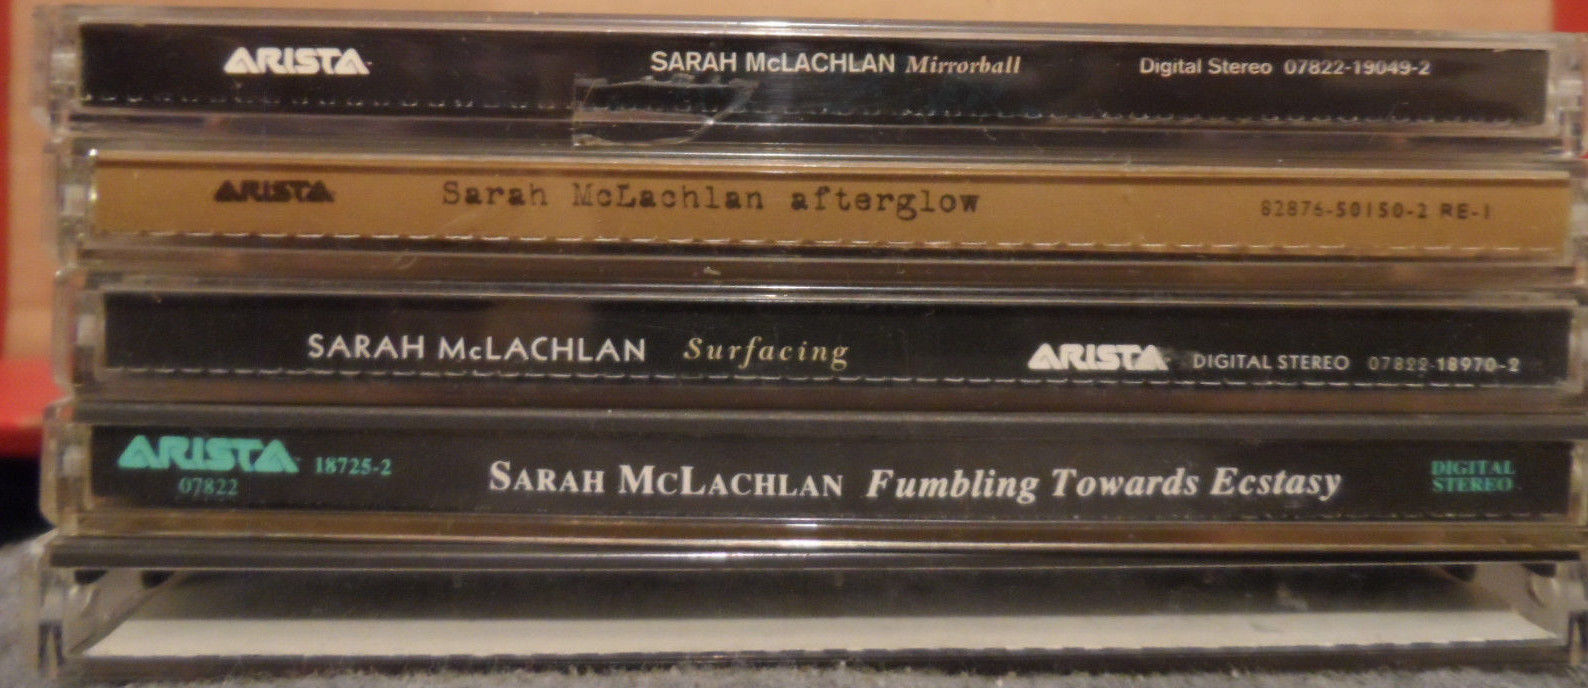 Sarah McLachlan 5 CD Lot Afterglow MIRRORBALL Surfacing FUNBLING TOWARDS Solace